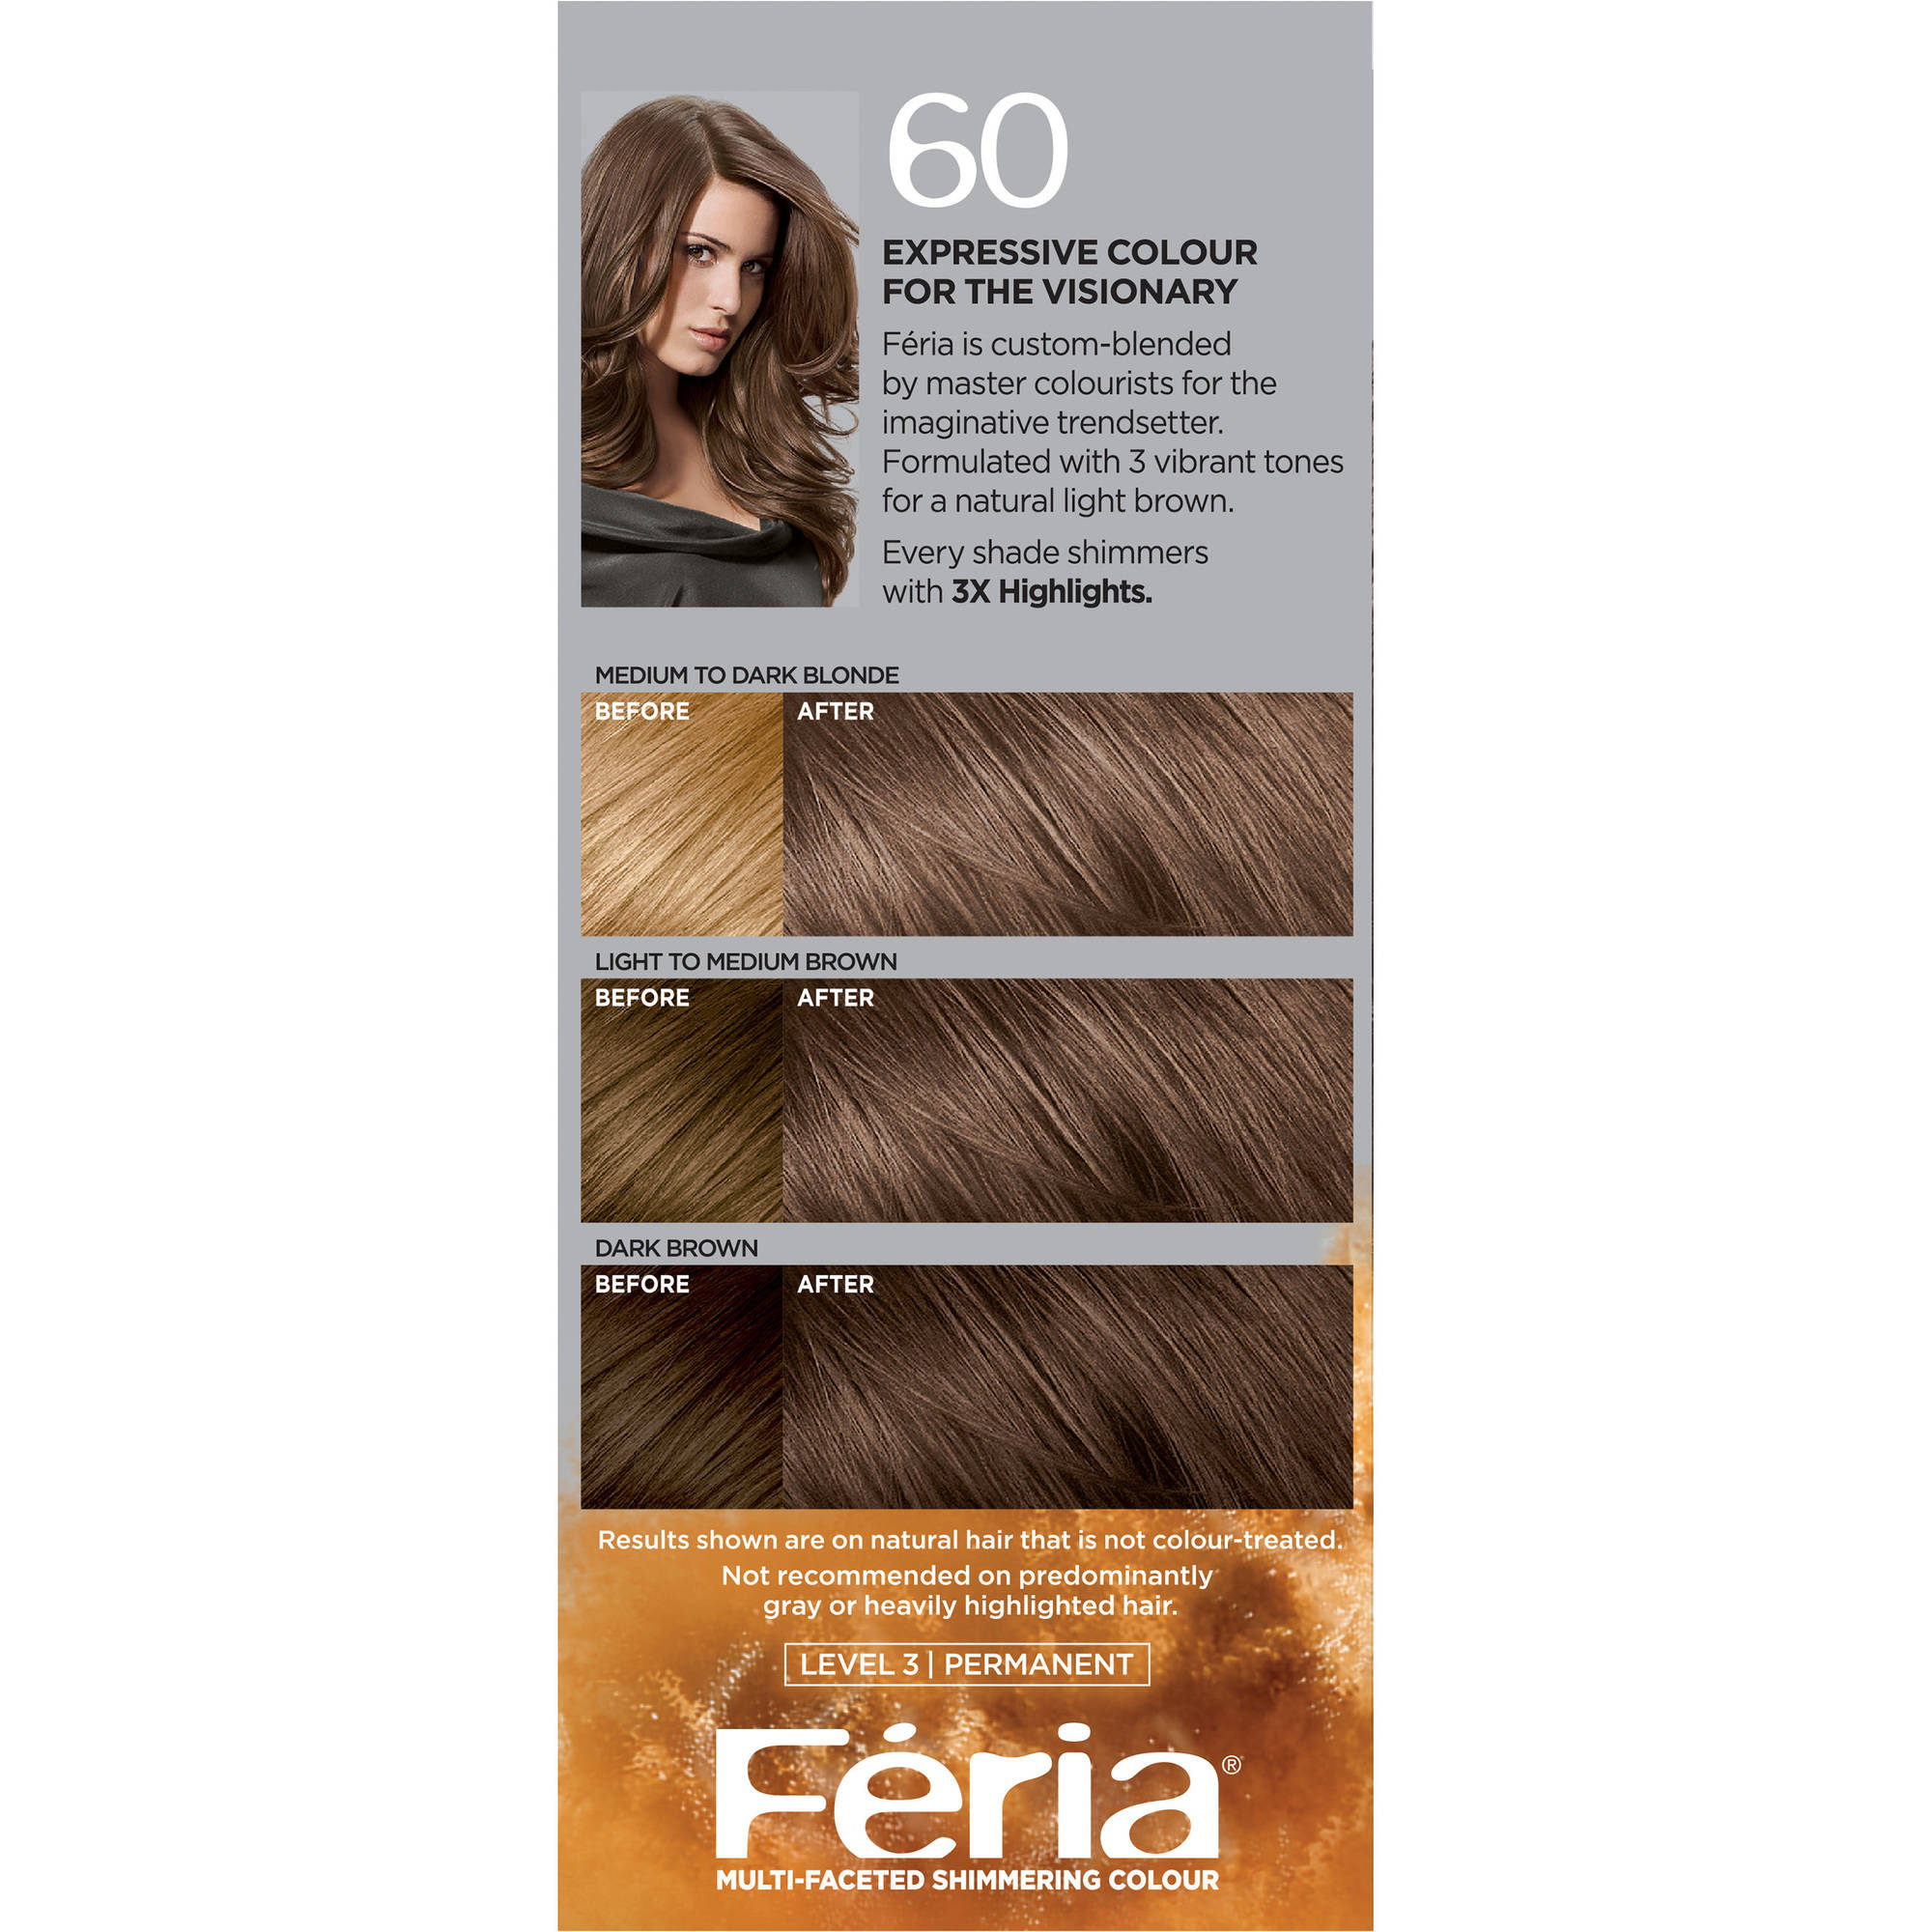 L'Oreal Paris Feria Permanent Hair Color, 60 Crystal Brown Light Brown - image 5 of 9